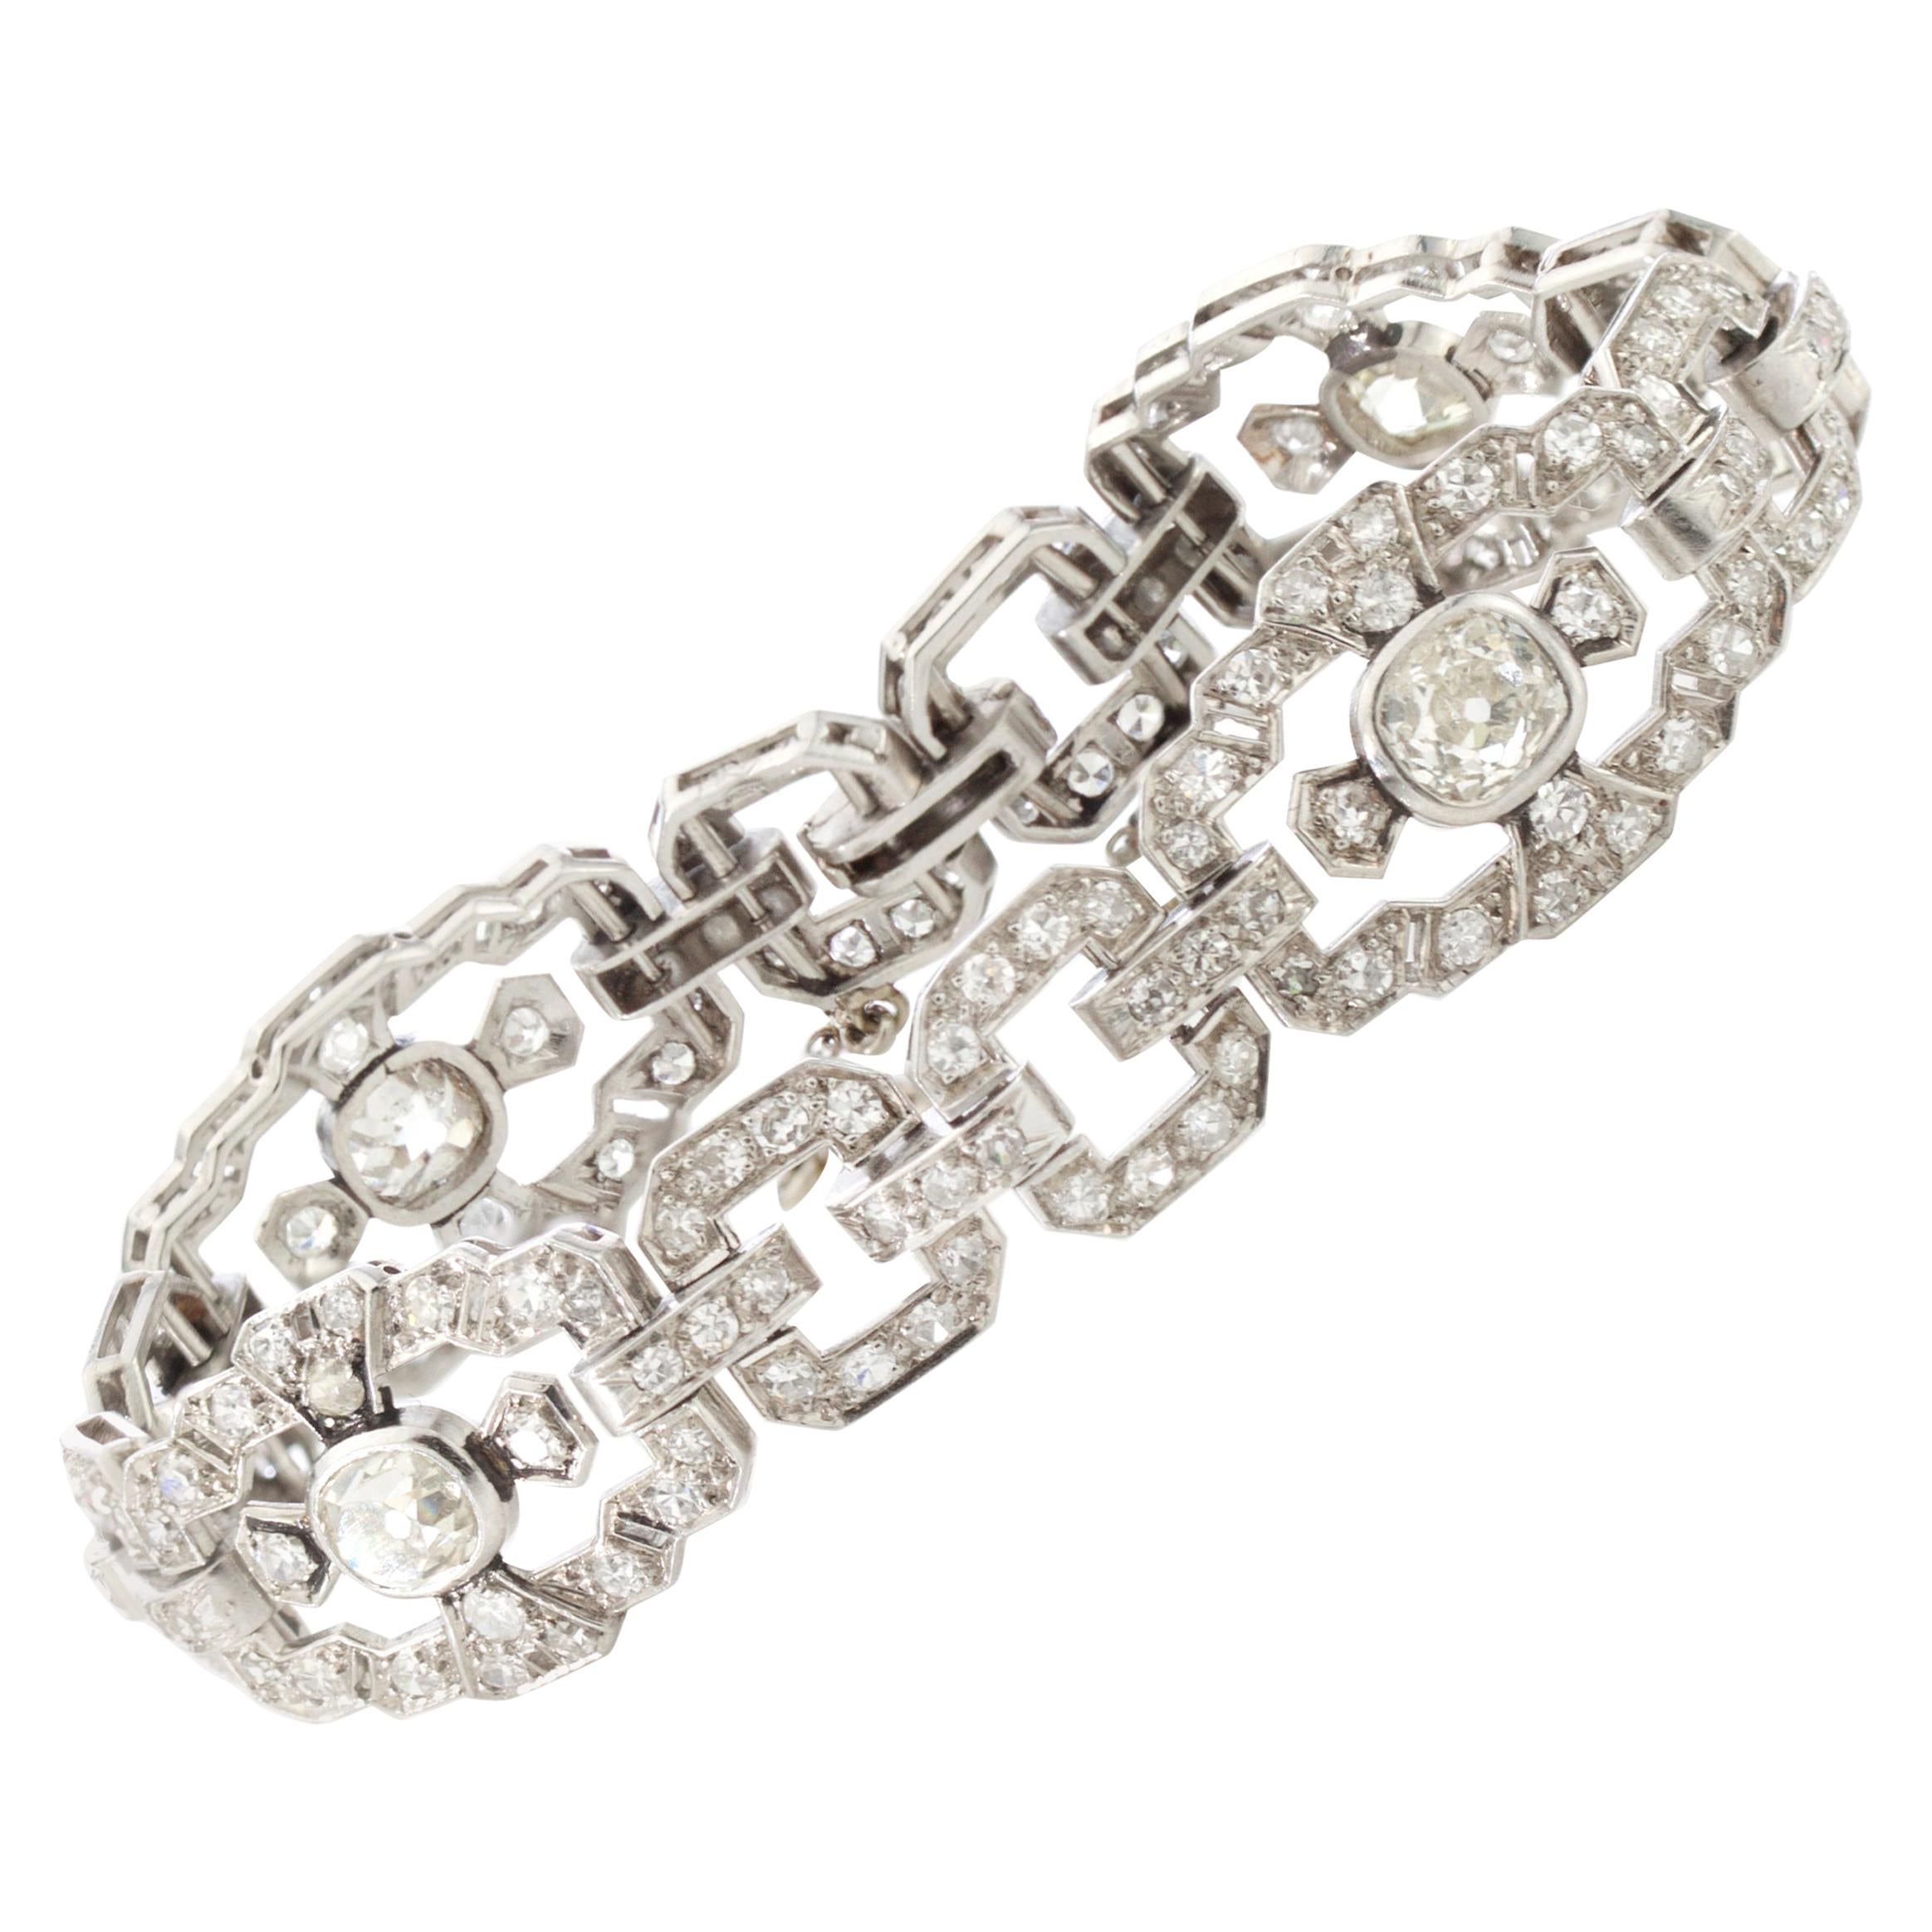 Art Deco Ladies Platinum Diamond Bracelet, with 5 Carat+ of Diamonds, 1920s